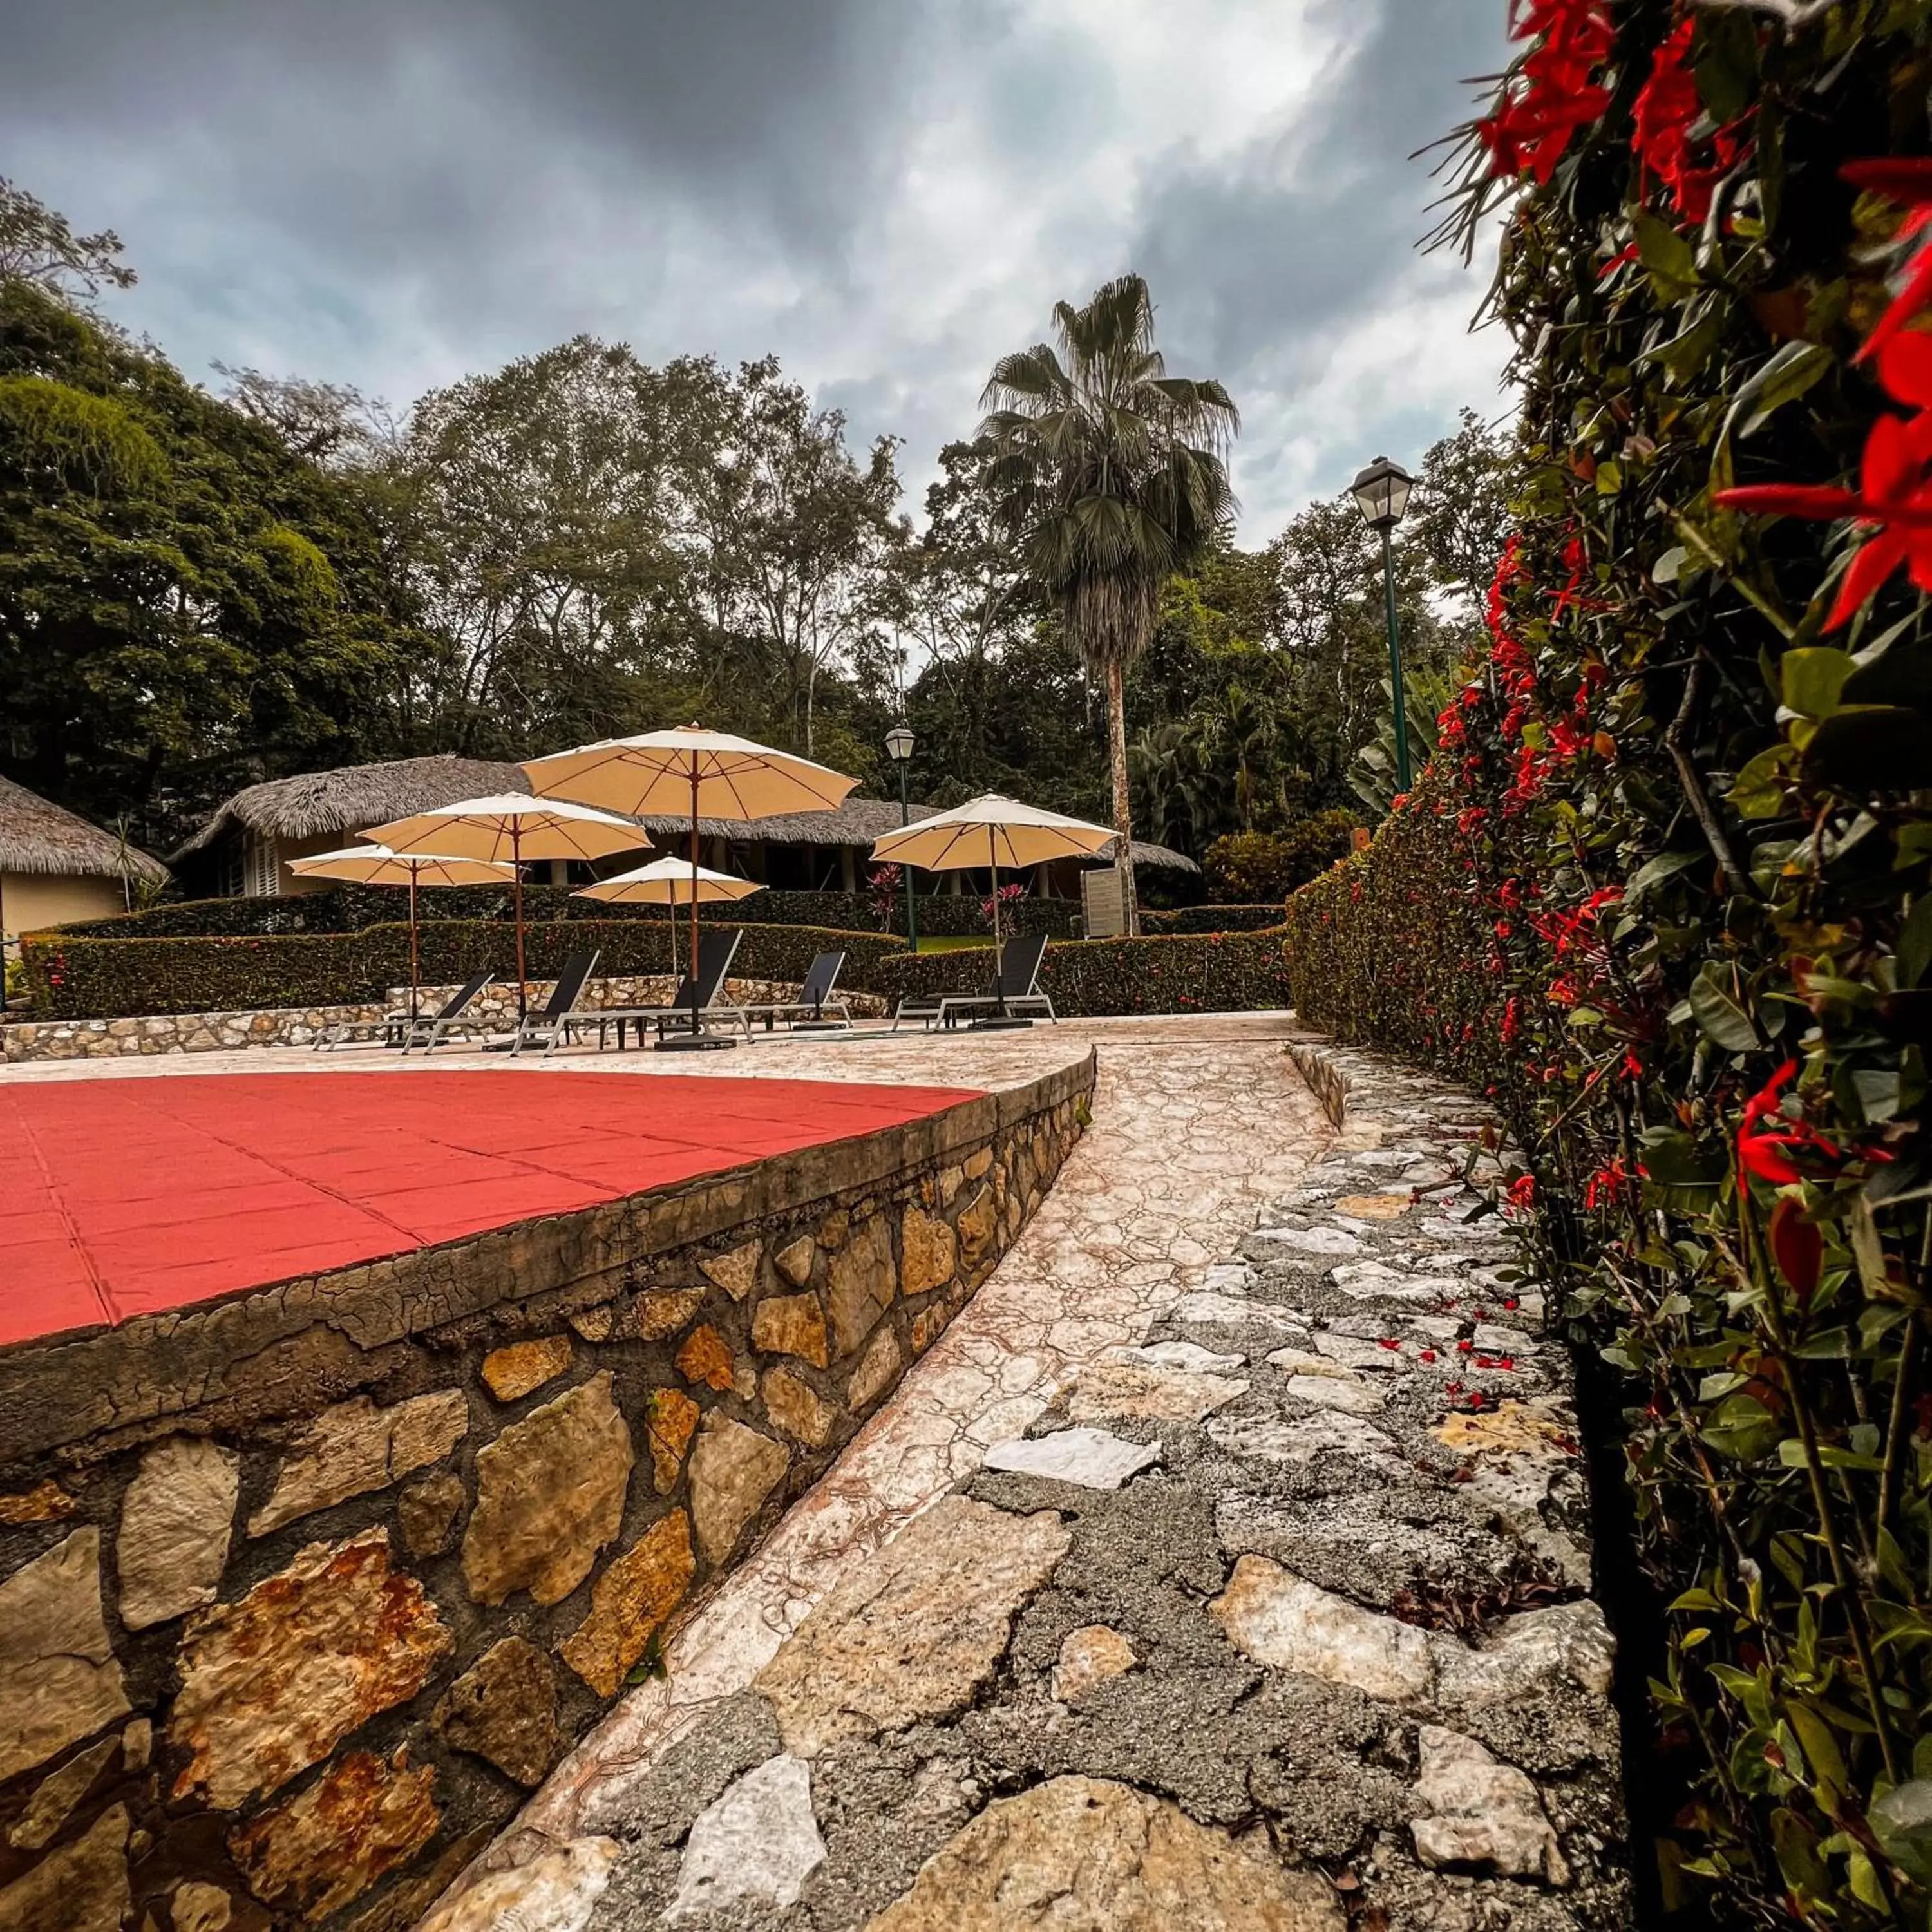 Patio in Hotel Villa Mercedes Palenque